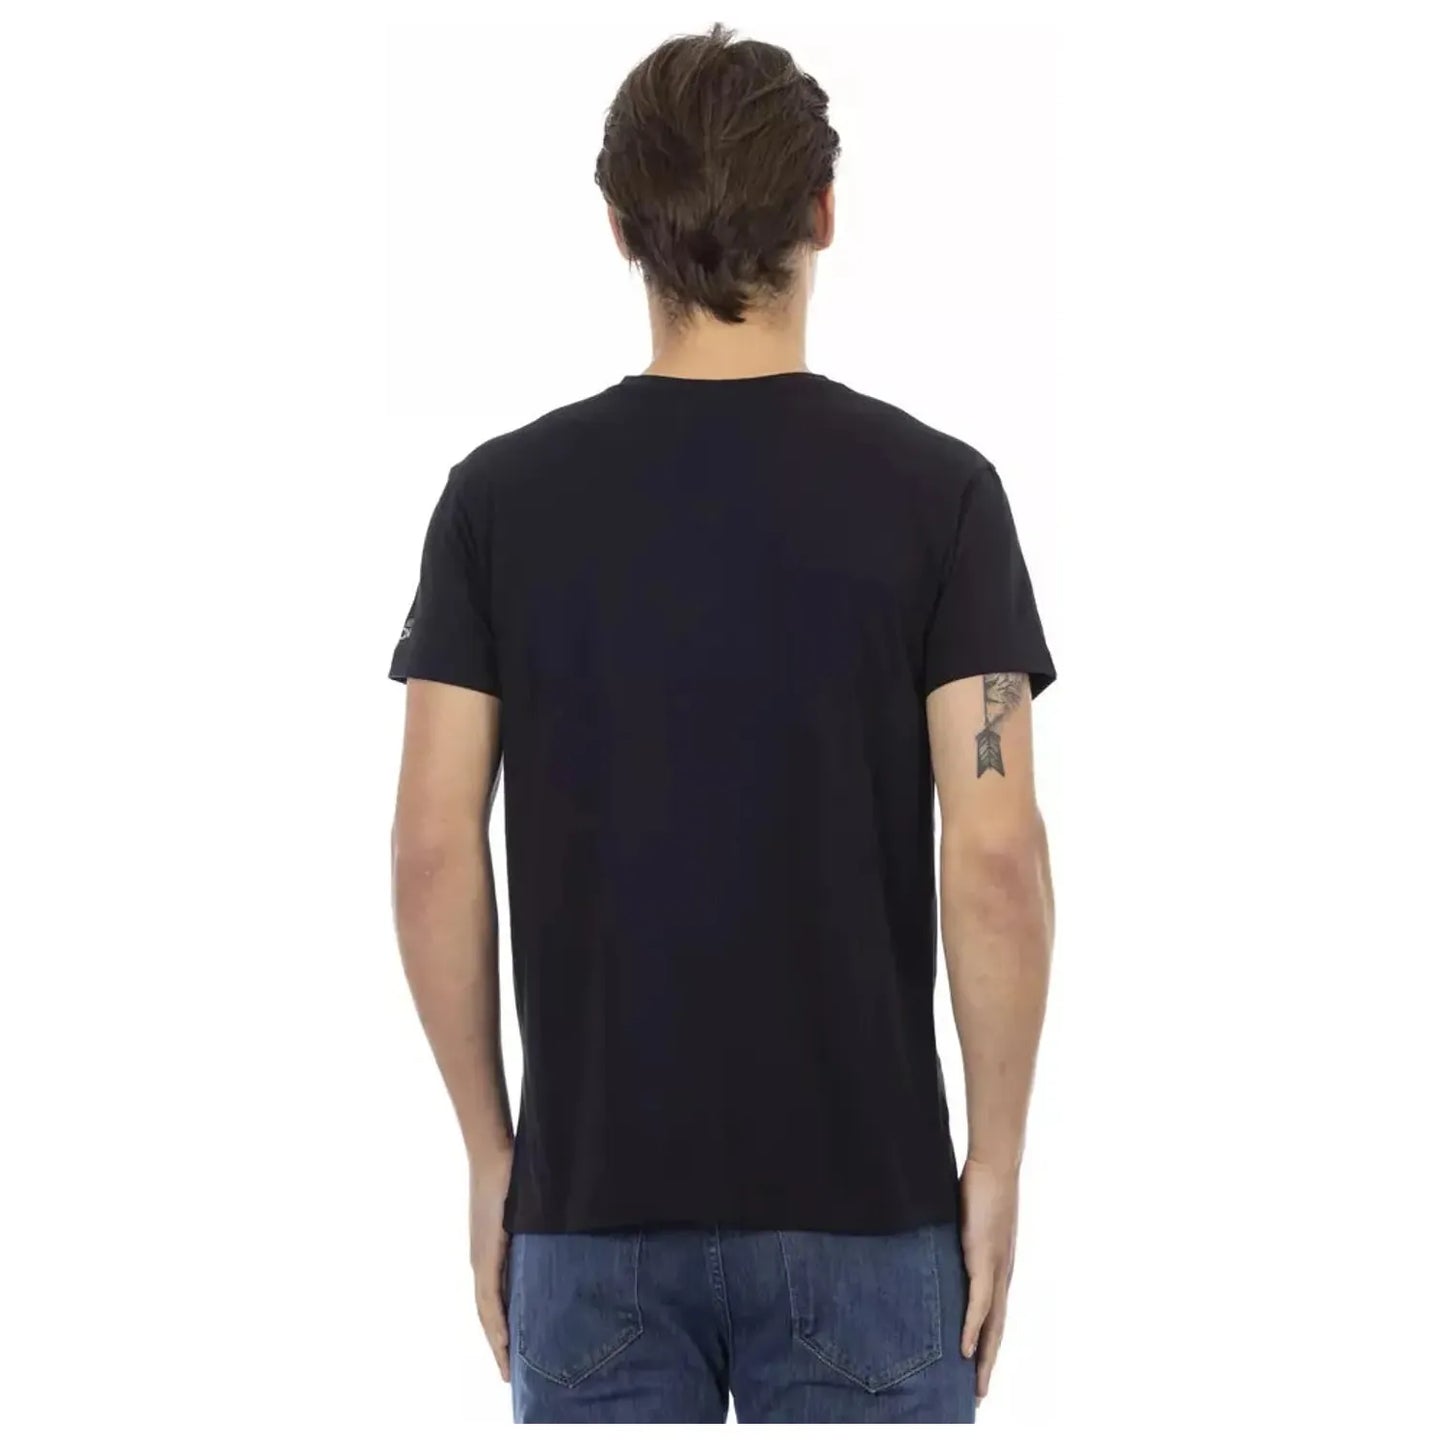 Trussardi Action Elegant V-Neck Tee with Chic Front Print black-cotton-t-shirt-25